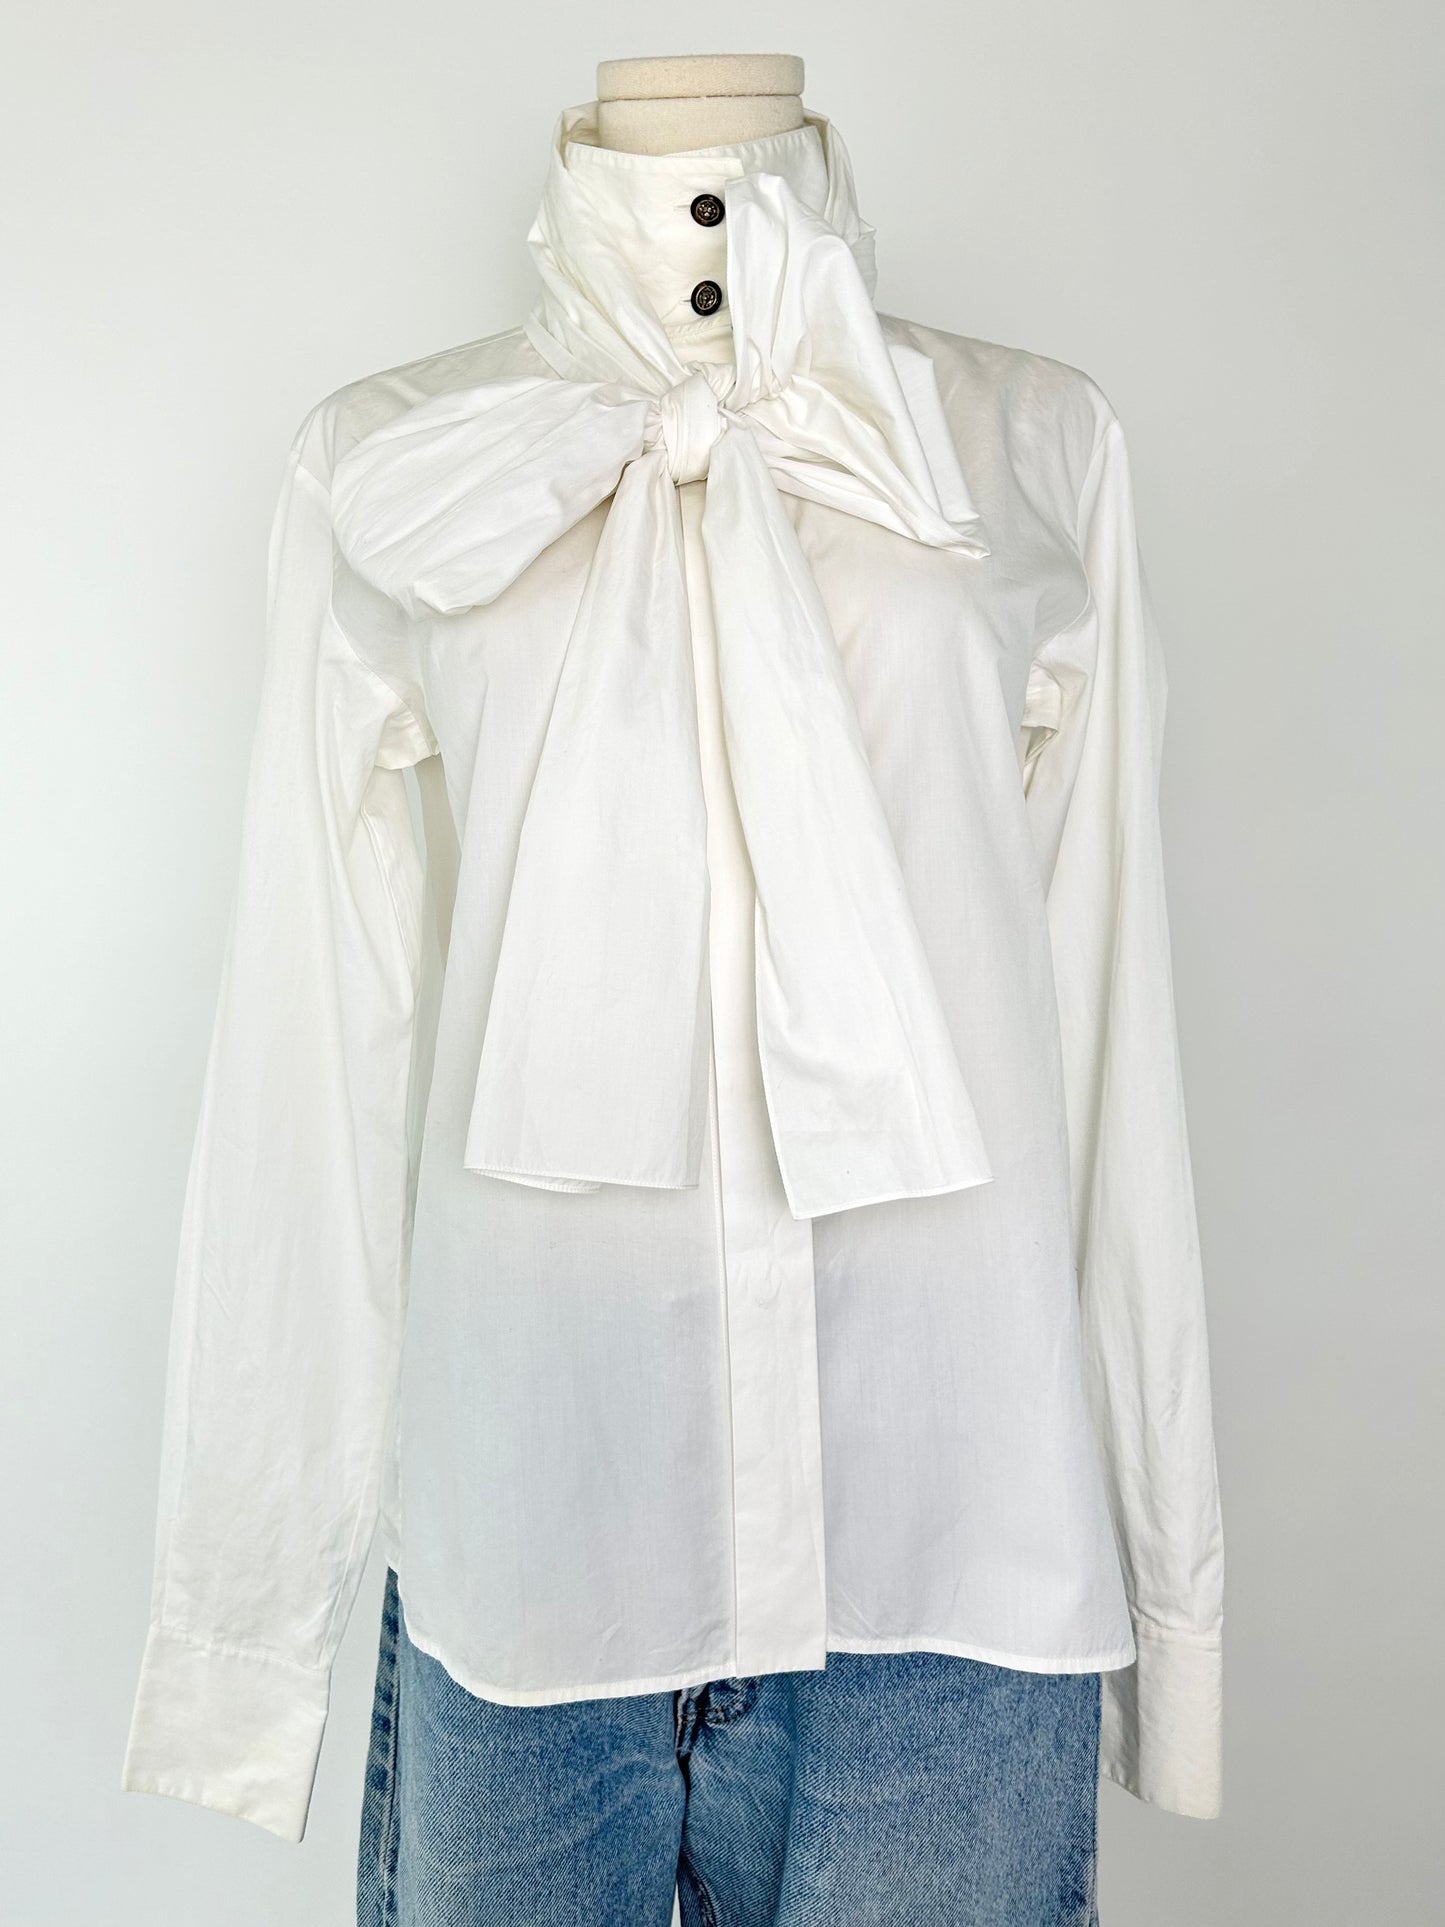 Chanel White Shirt